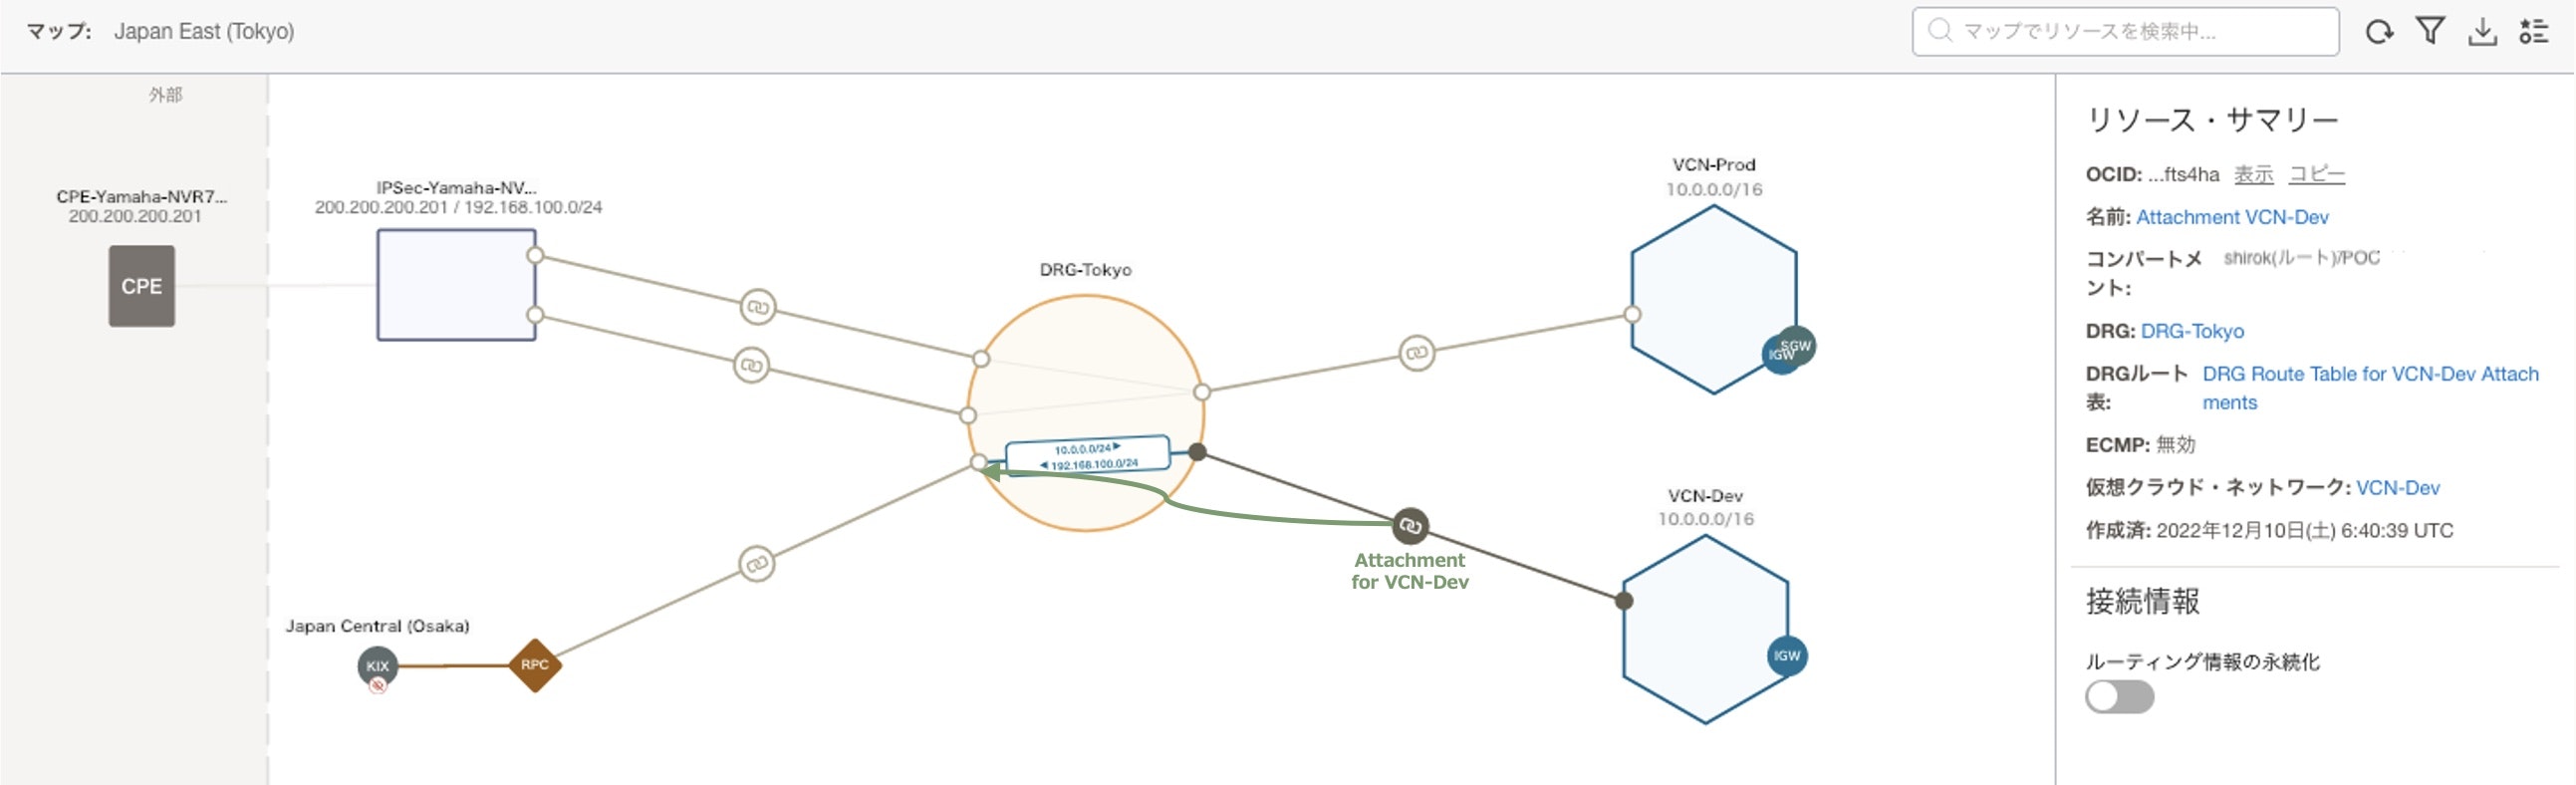 83_Network Visualizer_VCN-Dev(矢印).jpg